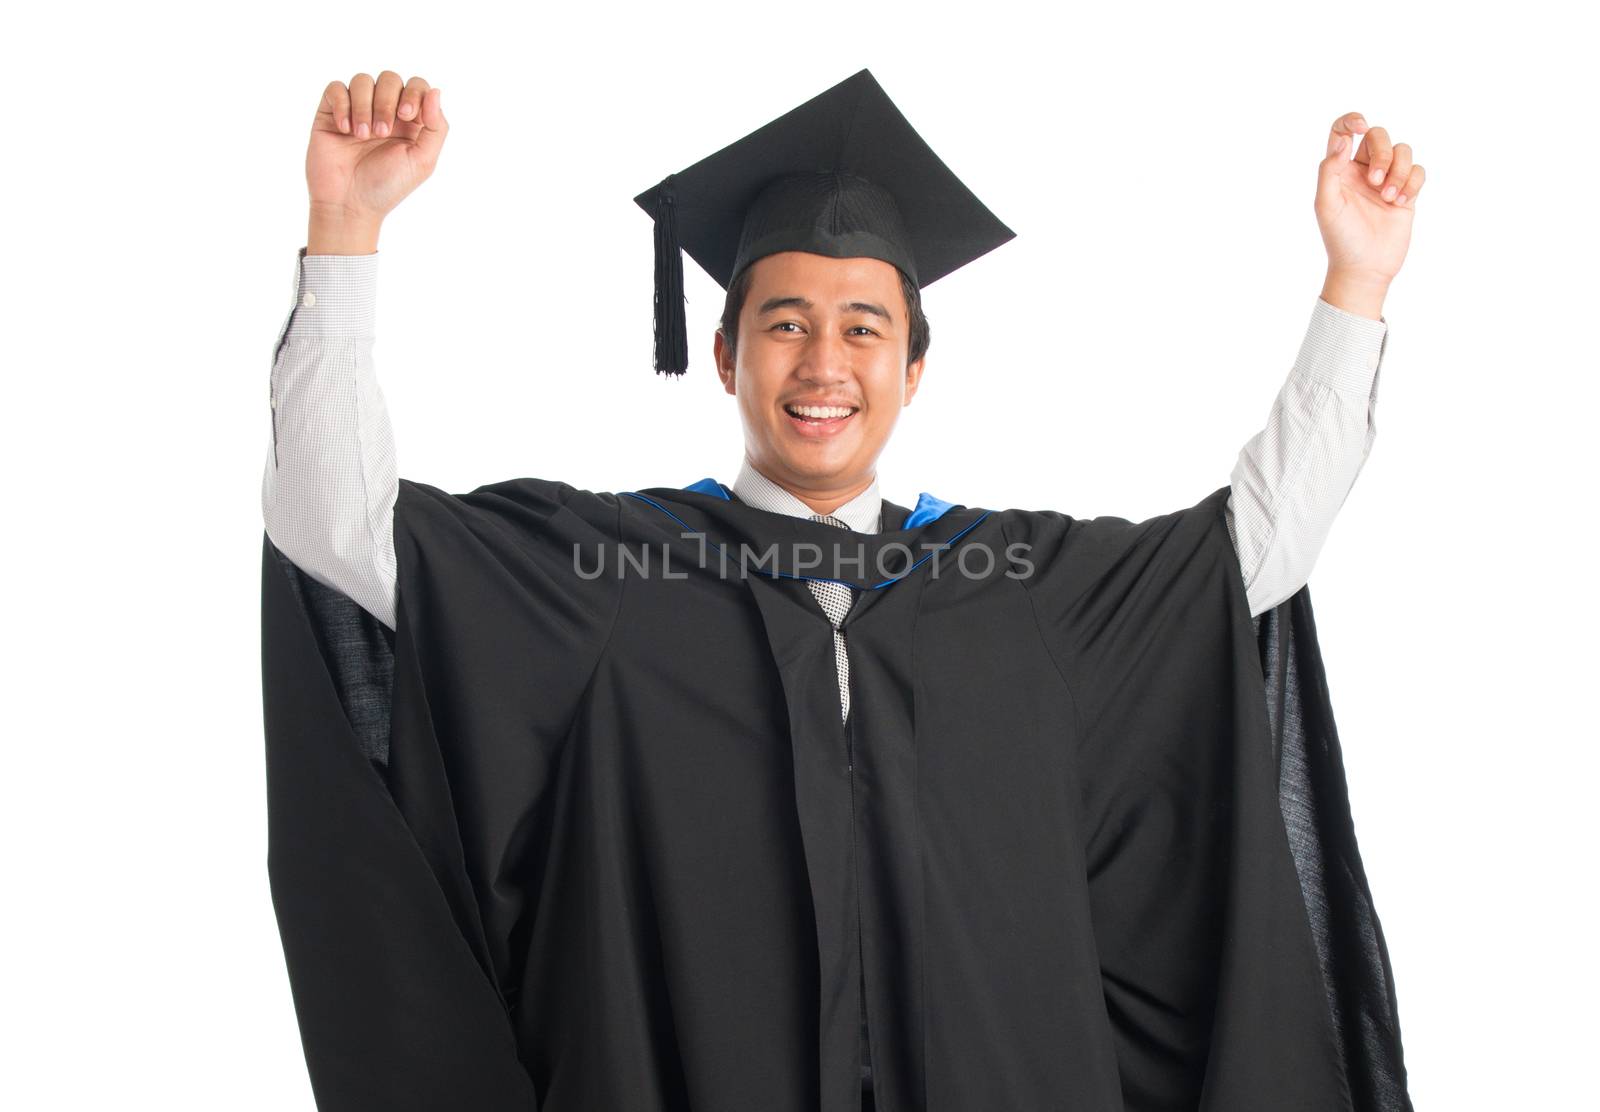 University student graduating by szefei